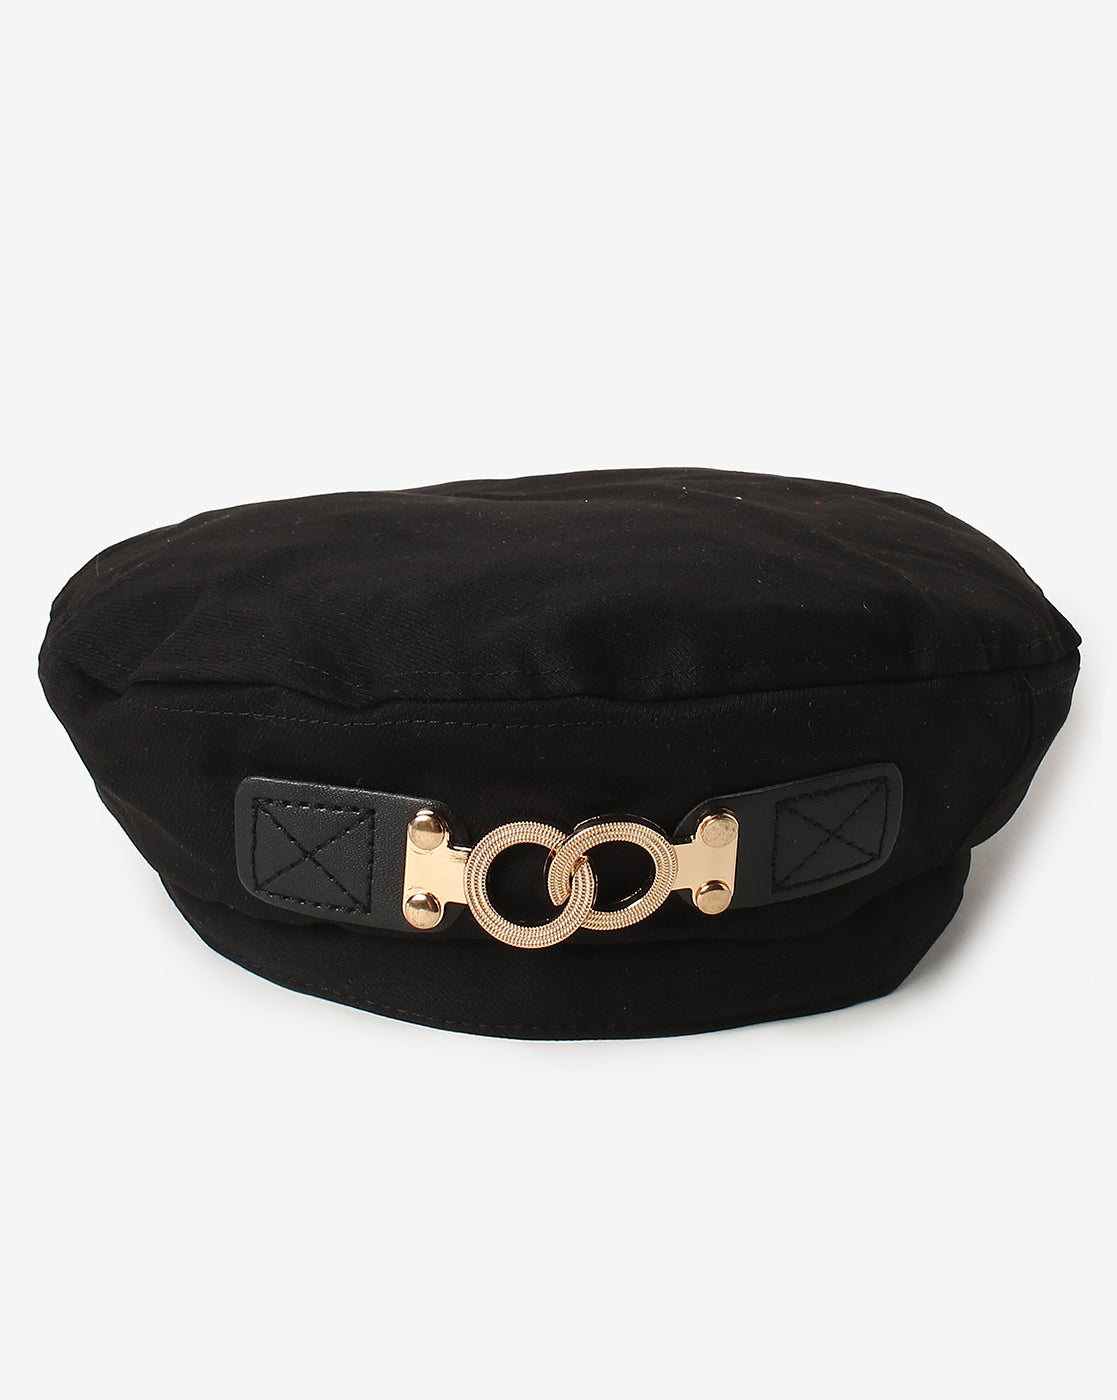 Stylish Solid Black Hat